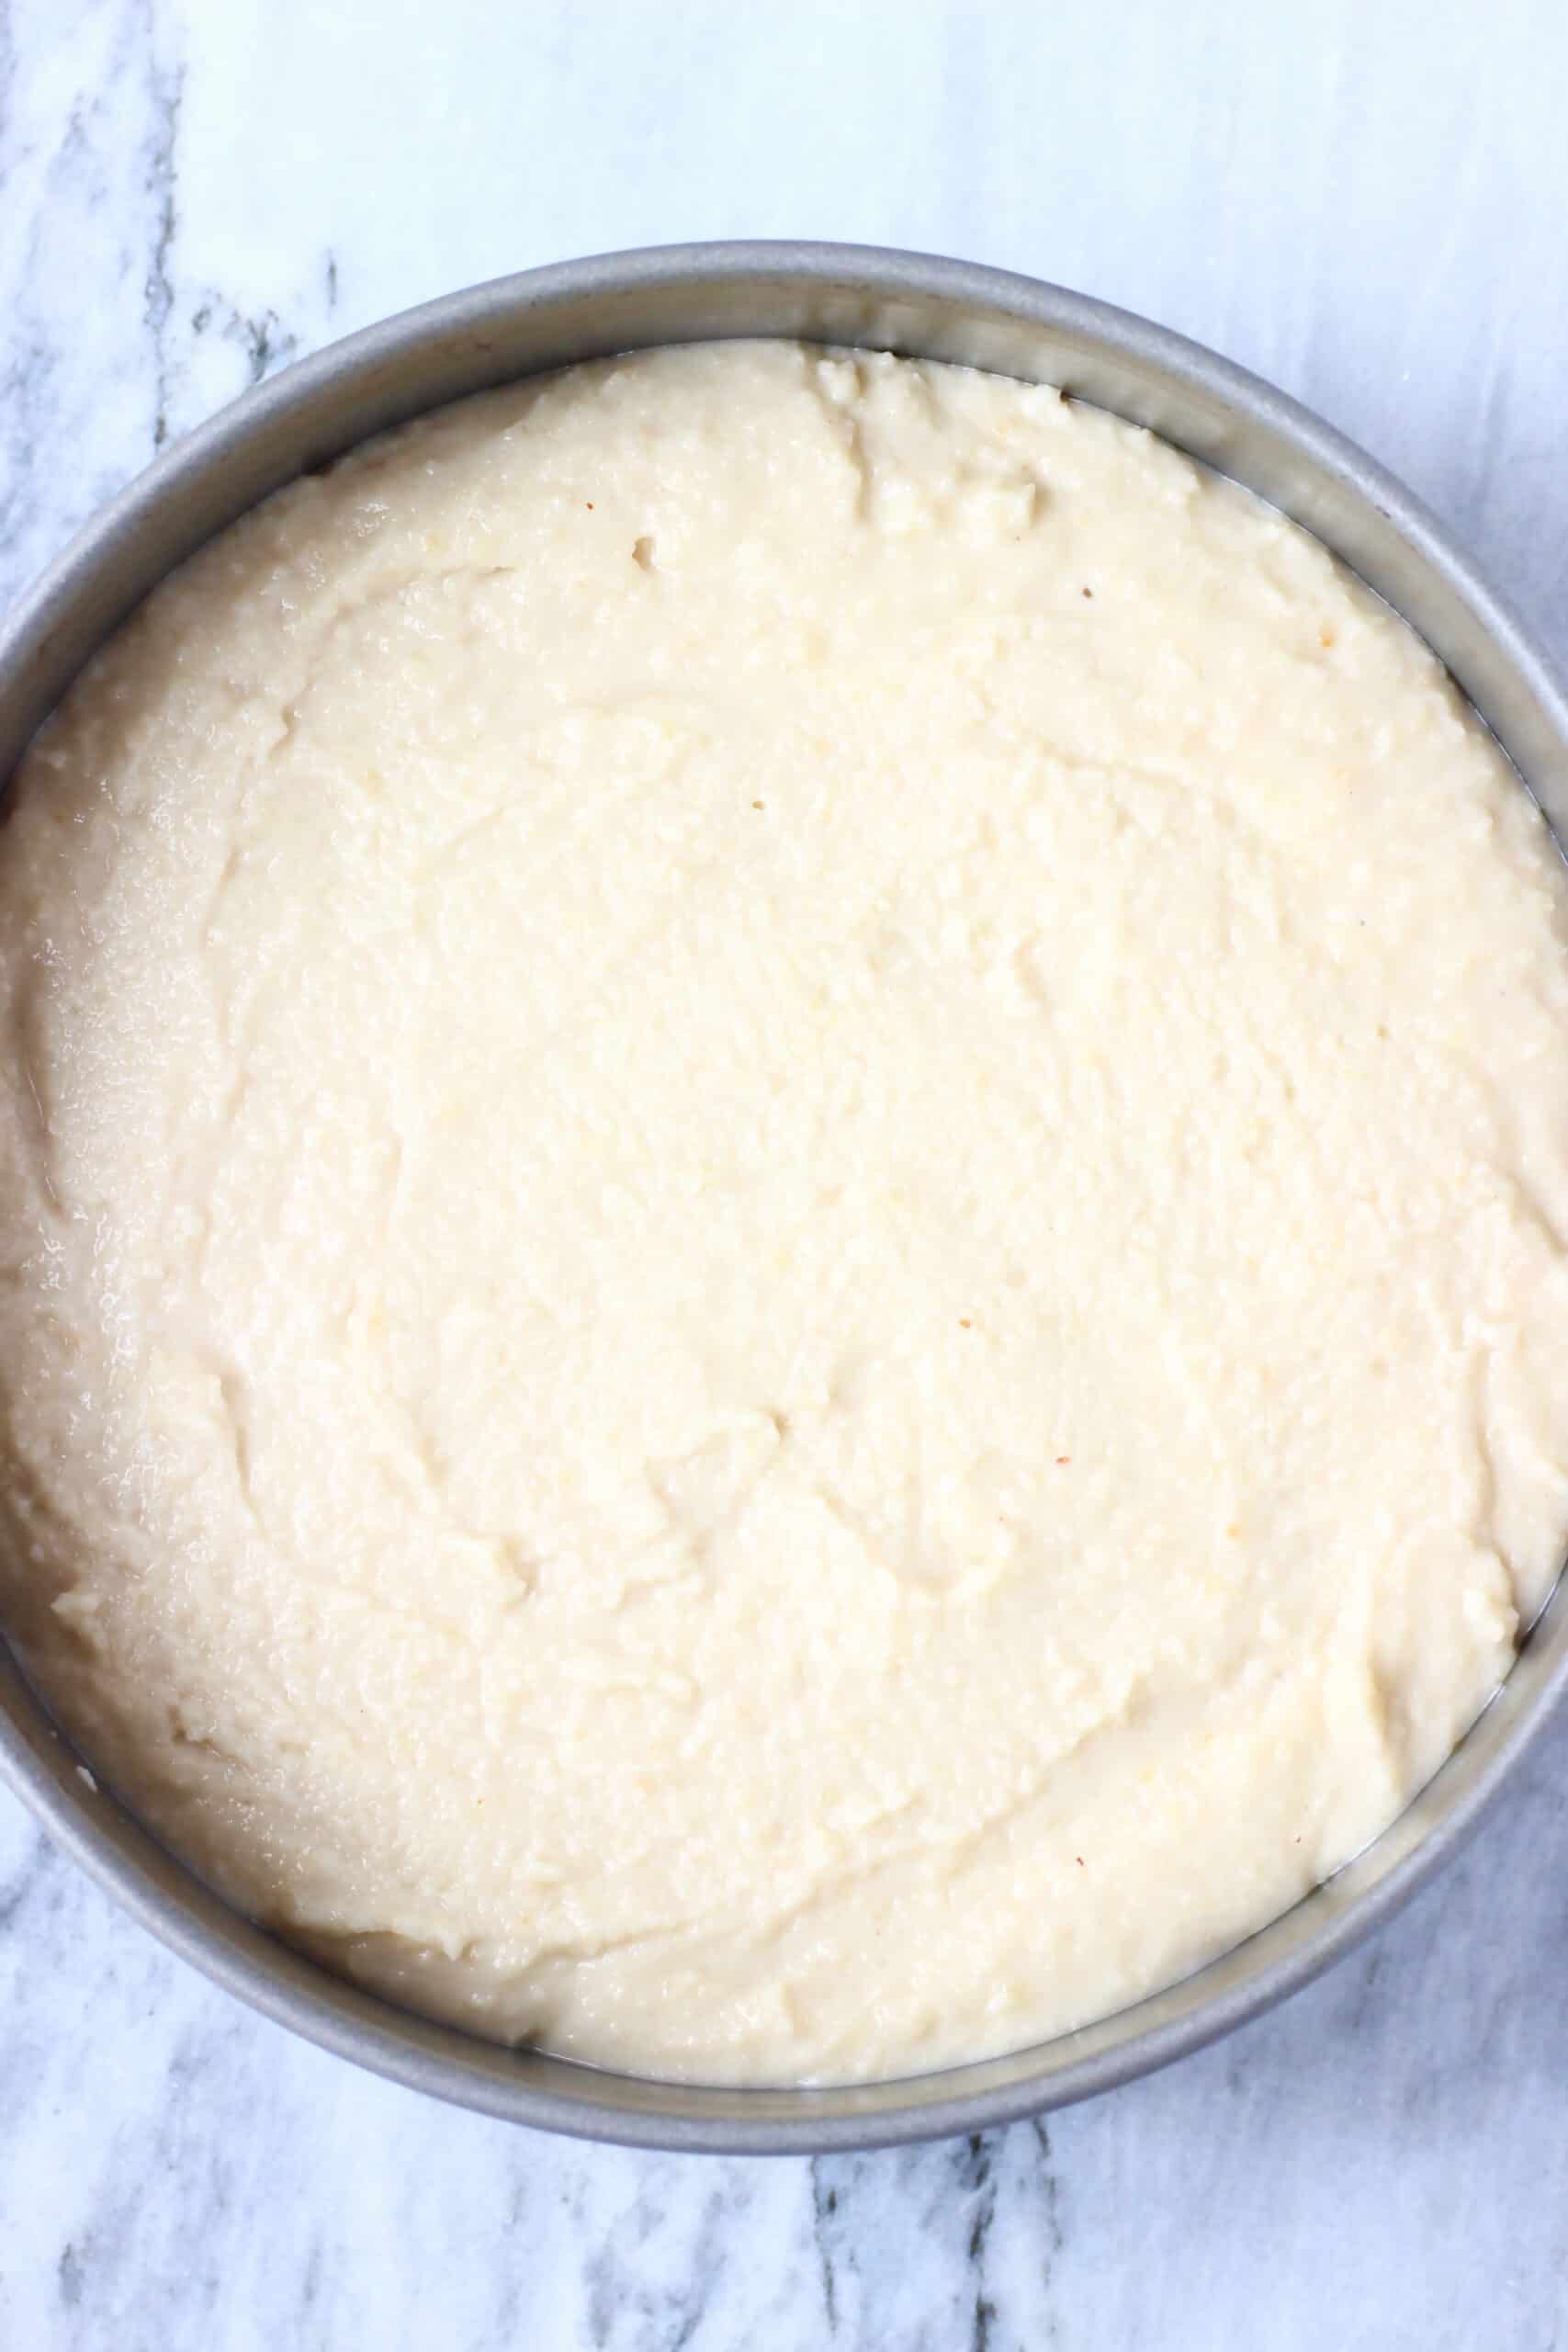 Masa de pastel de llovizna de limón vegano sin gluten cruda en un molde desmontable